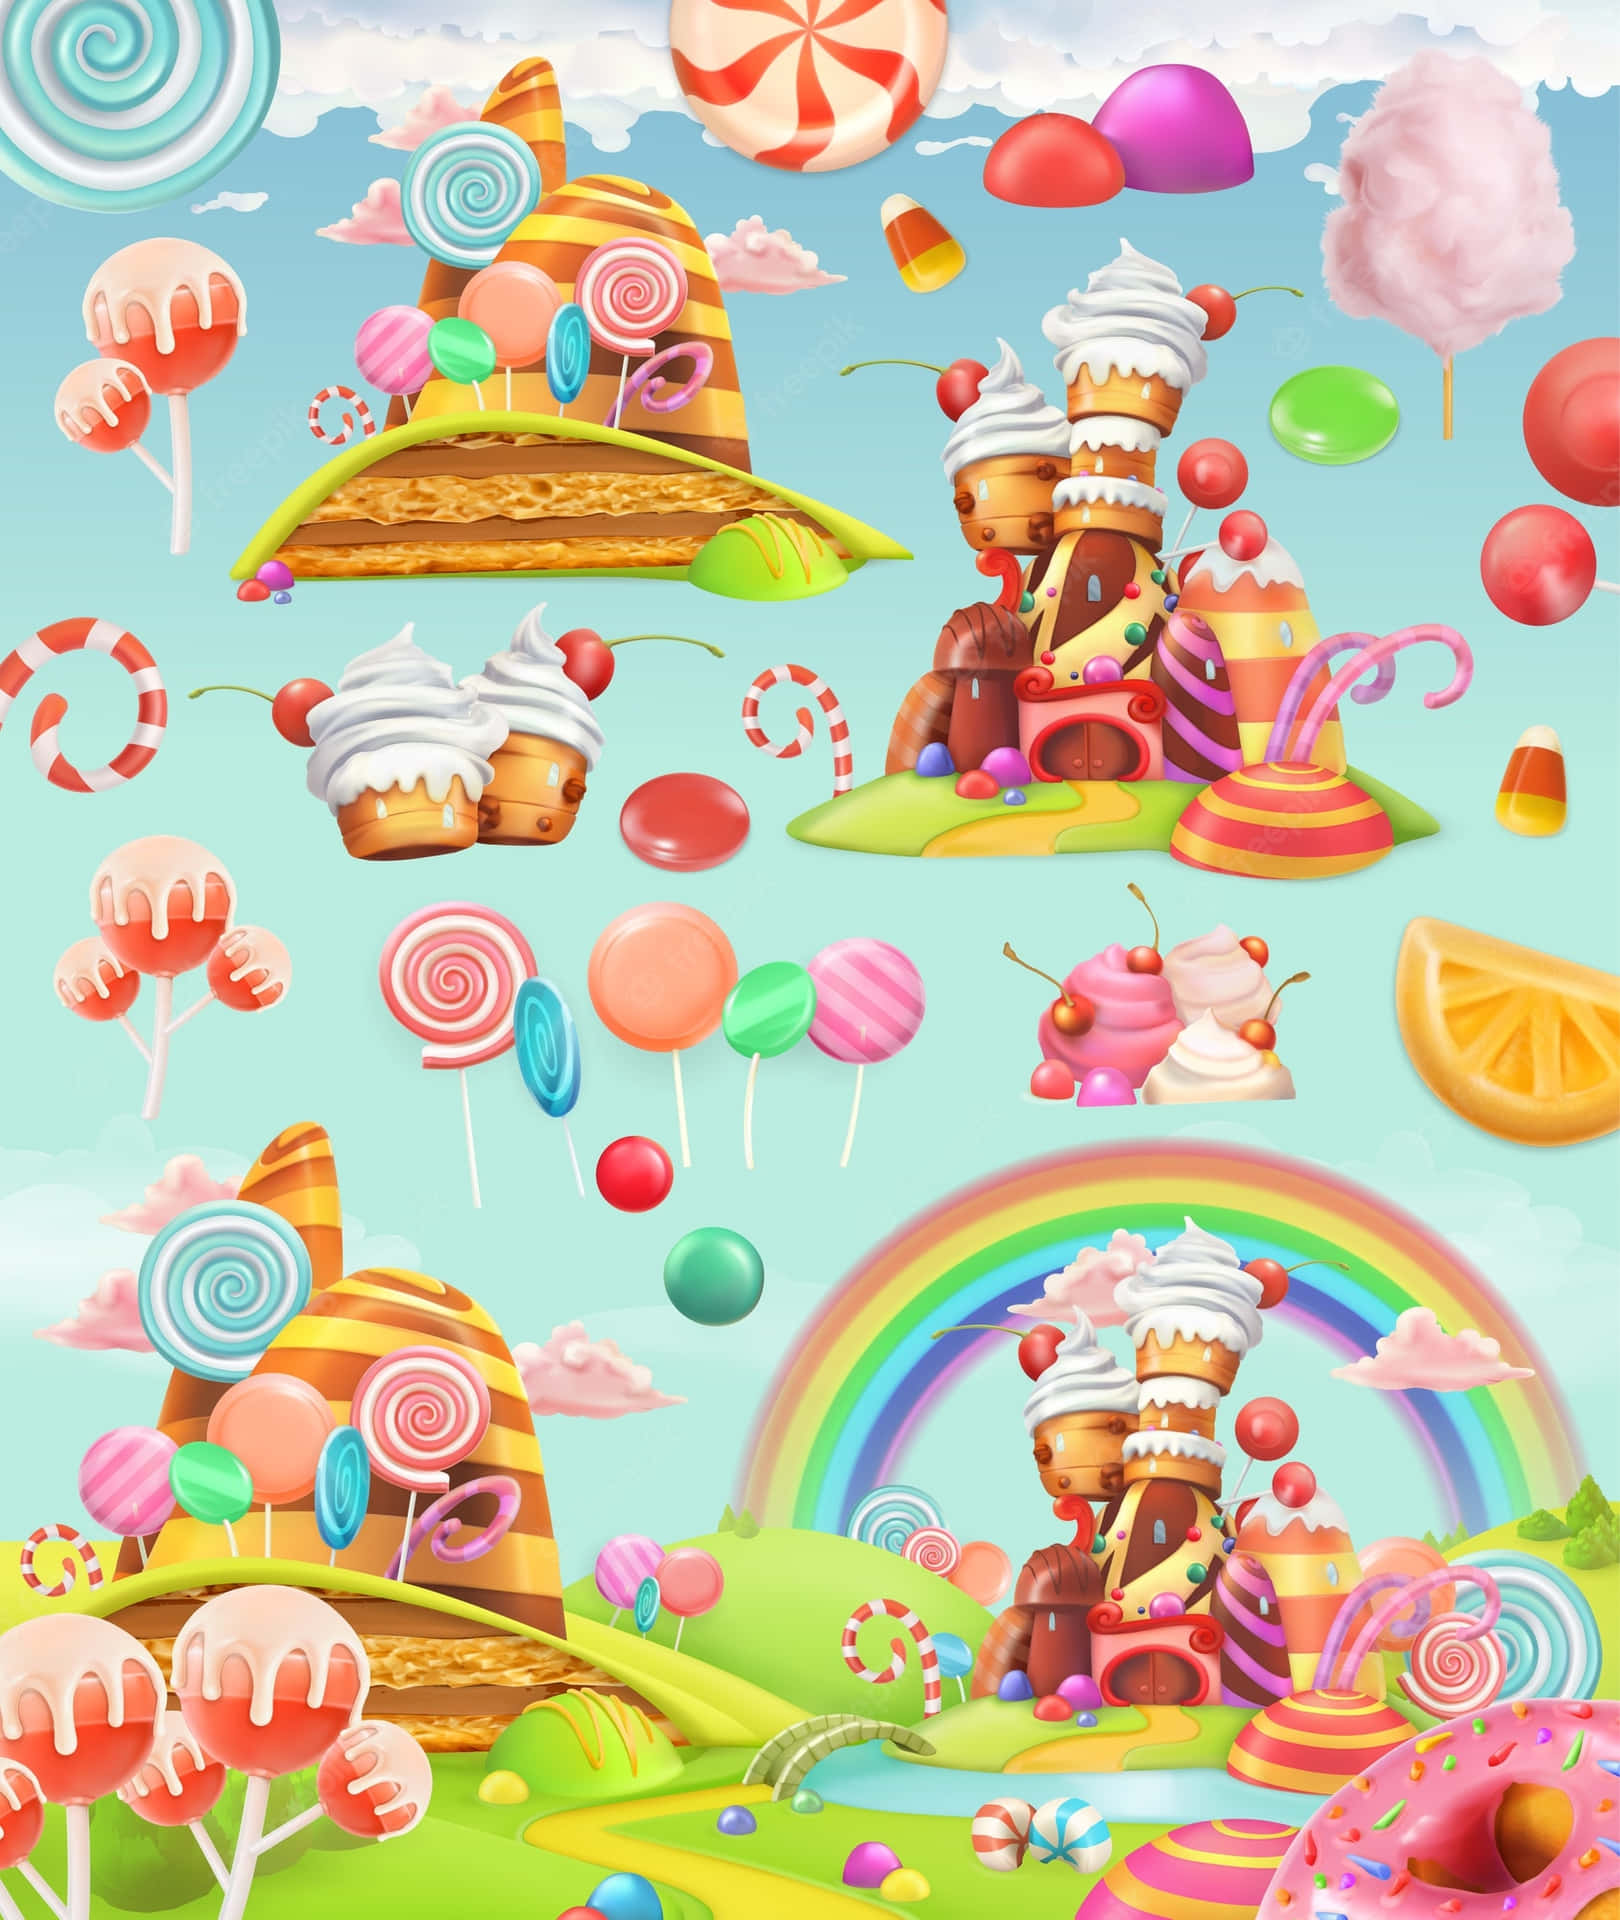 Candy Land Background Images  Free Download on Freepik